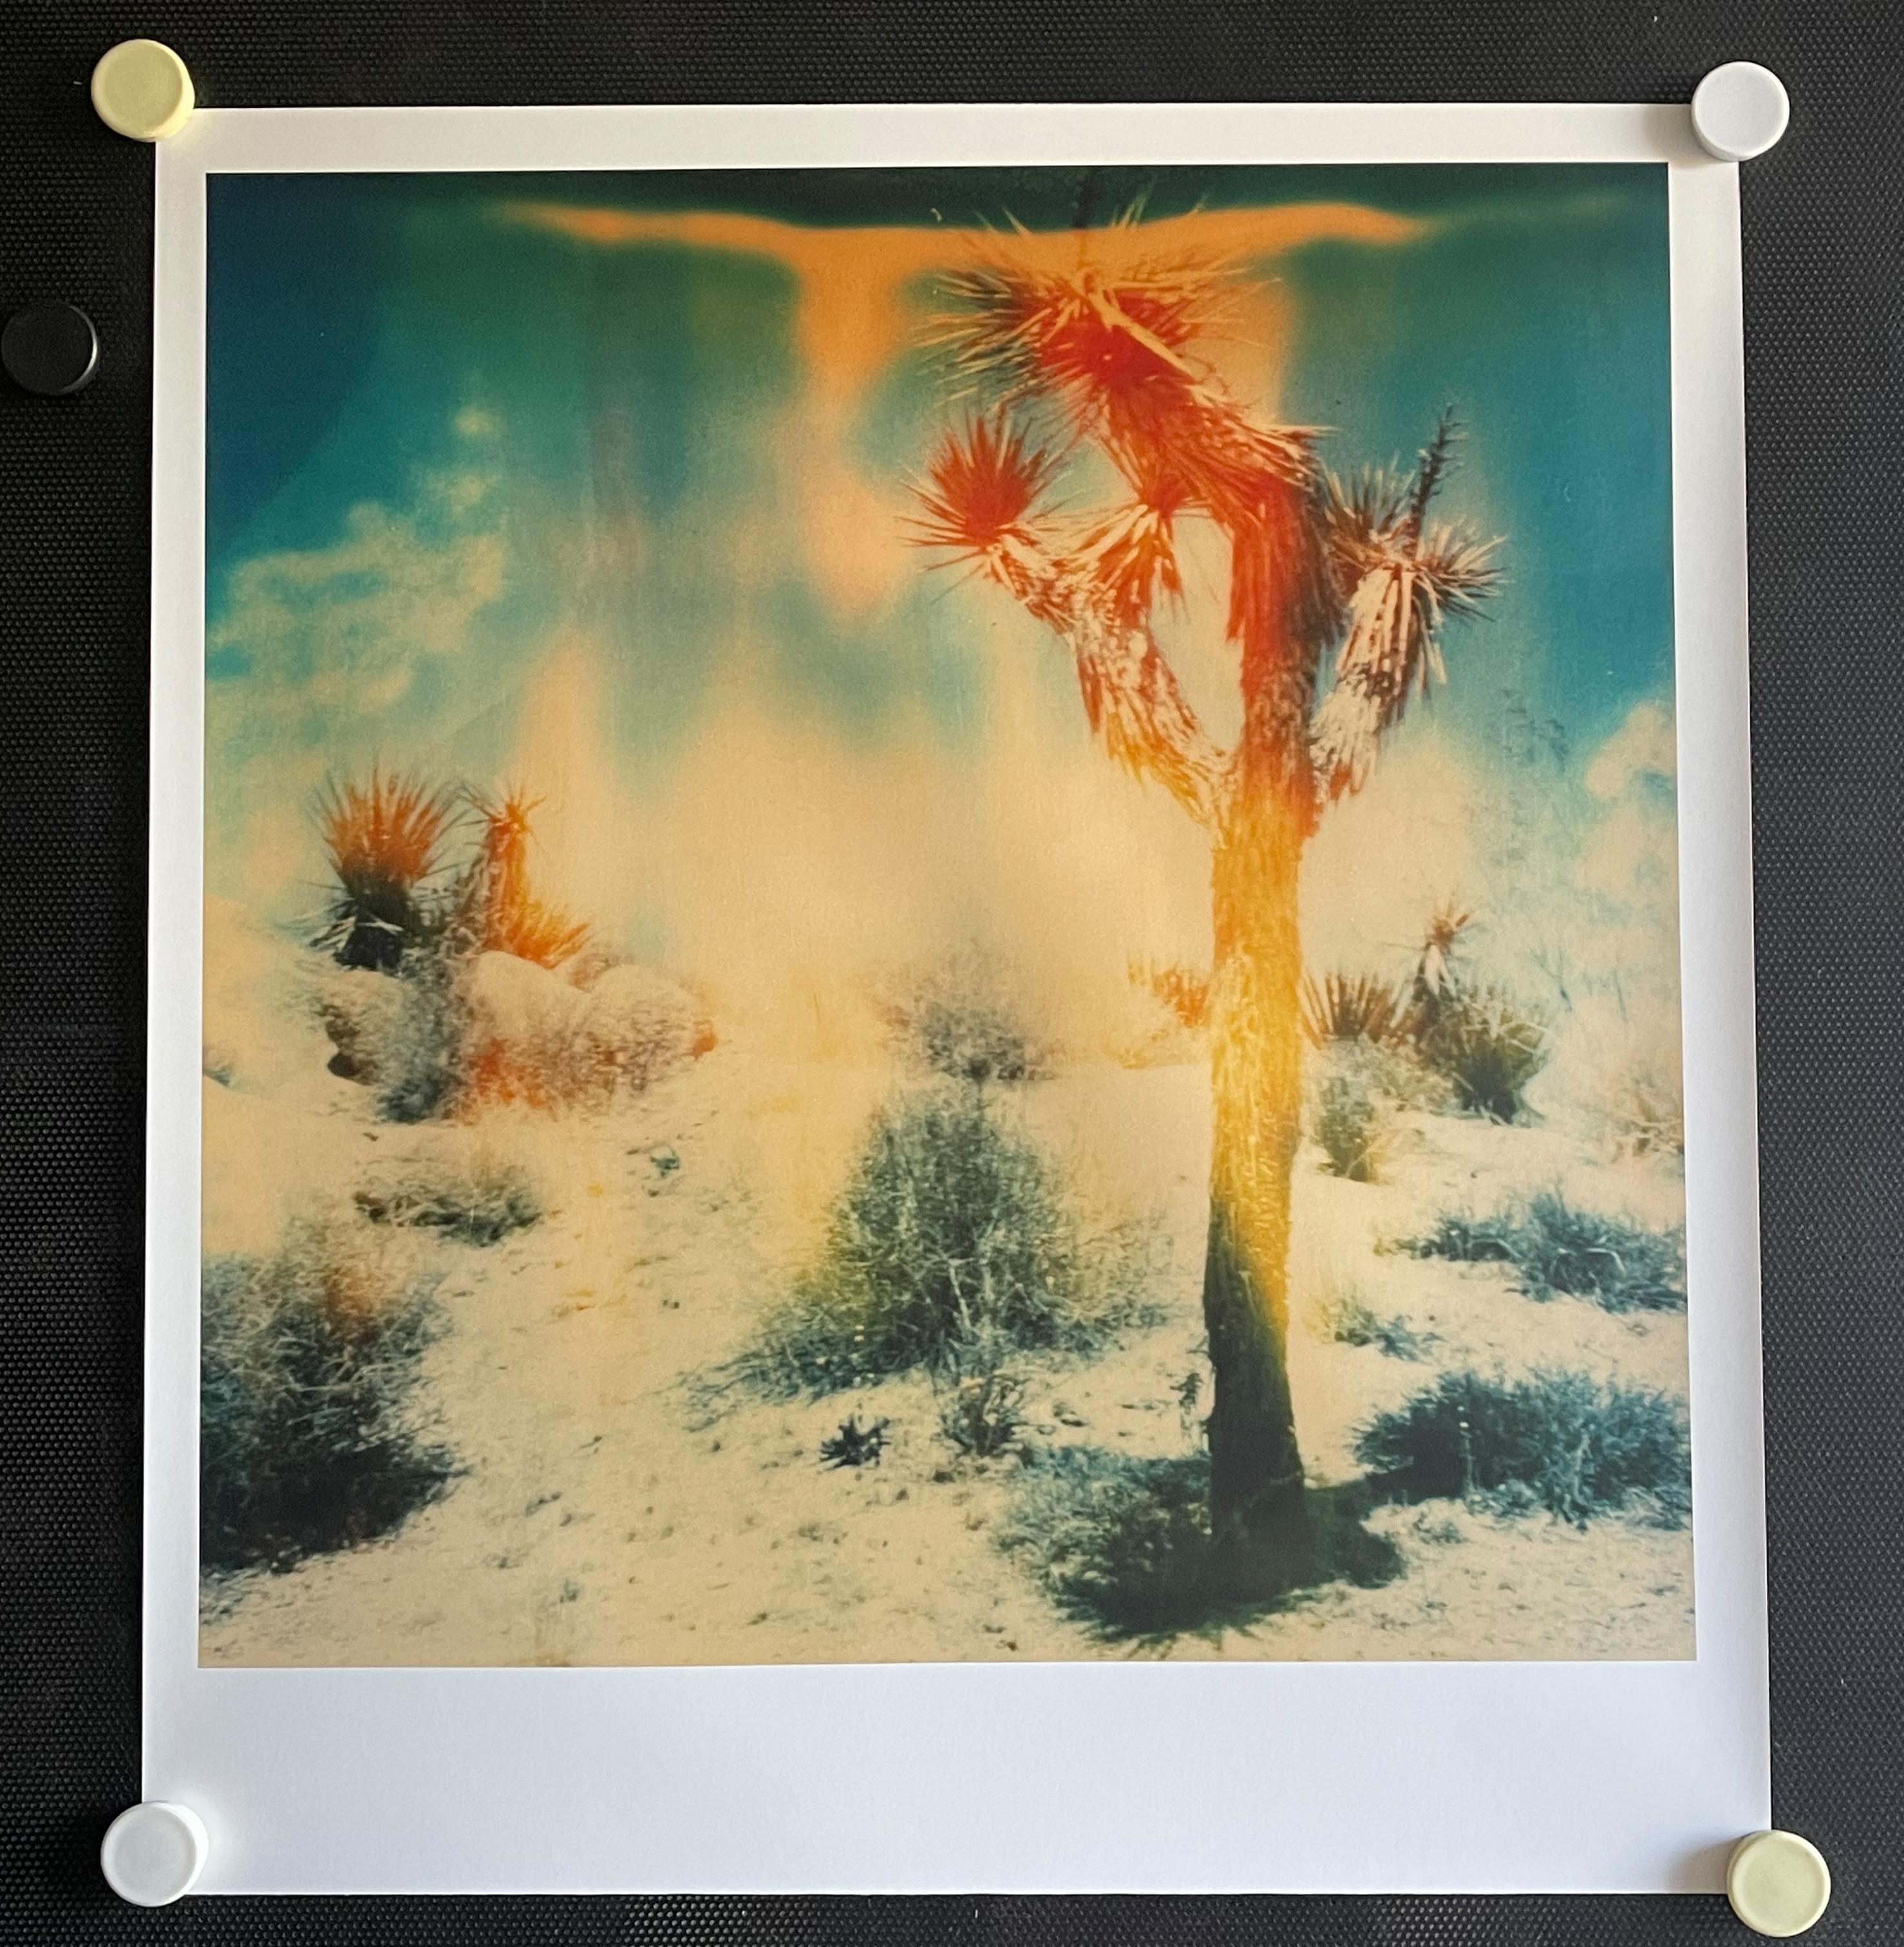 Stefanie Schneider Color Photograph - Buried - Contemporary, Landscape, Figurative, expired, Polaroid, analog